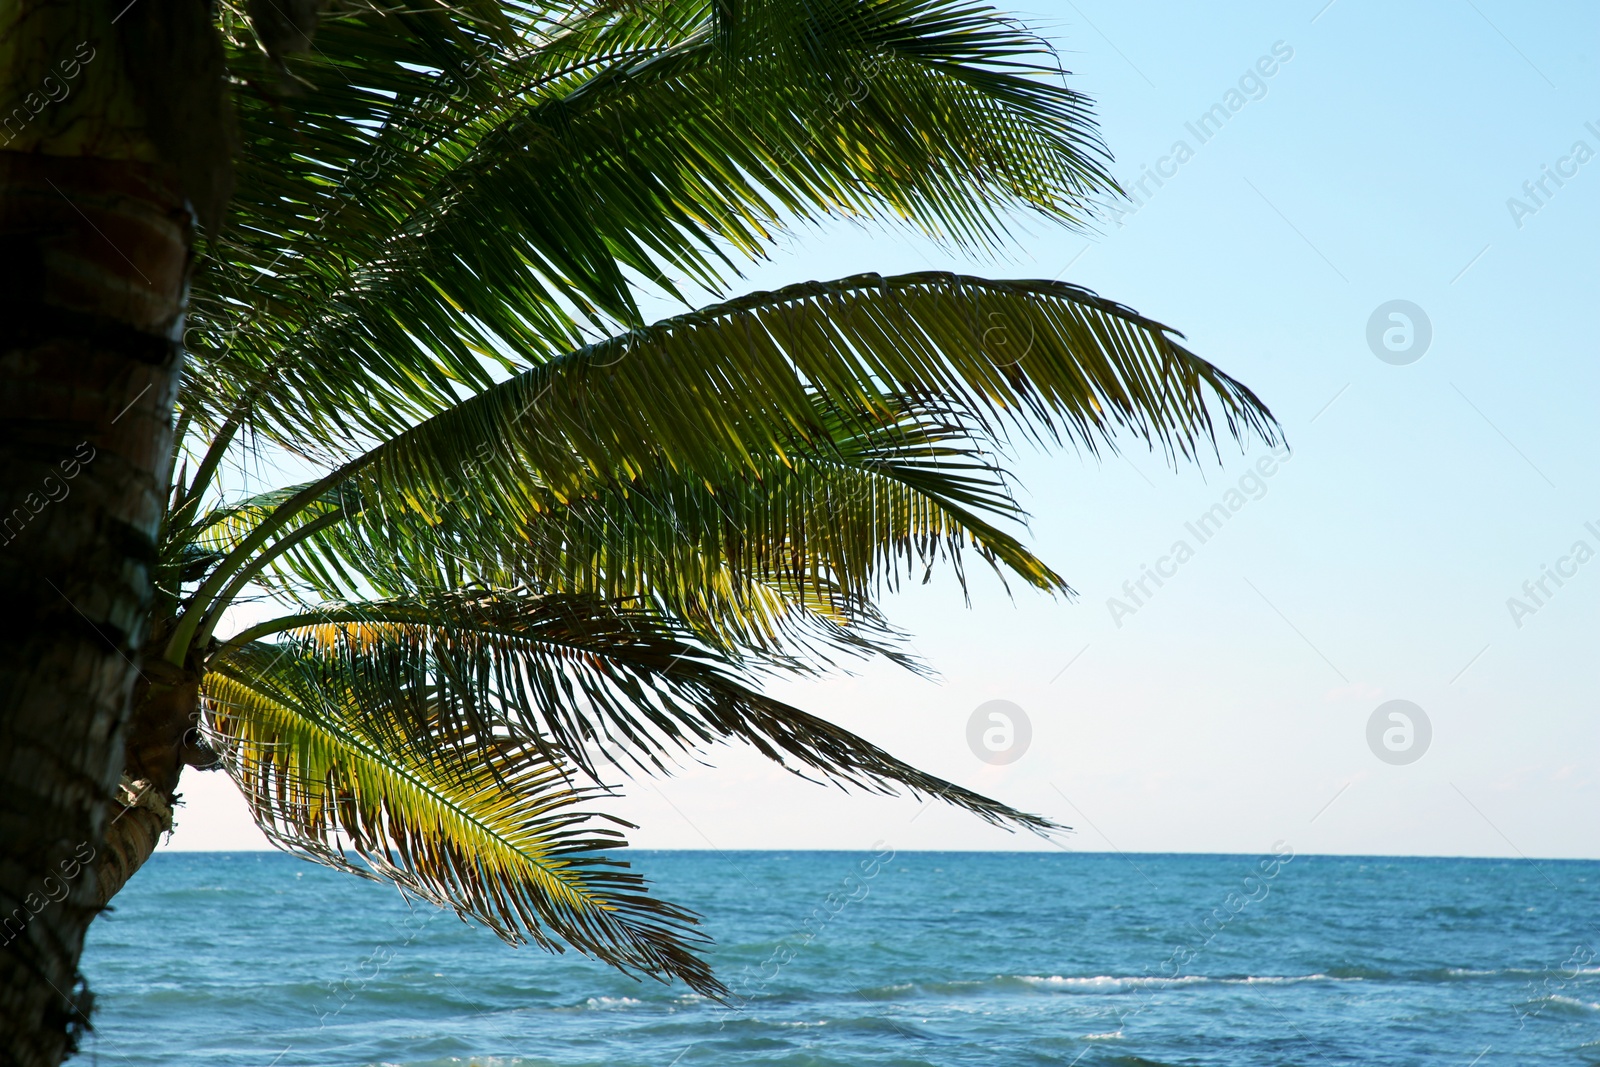 Photo of Beautiful palm tree with green leaves near sea